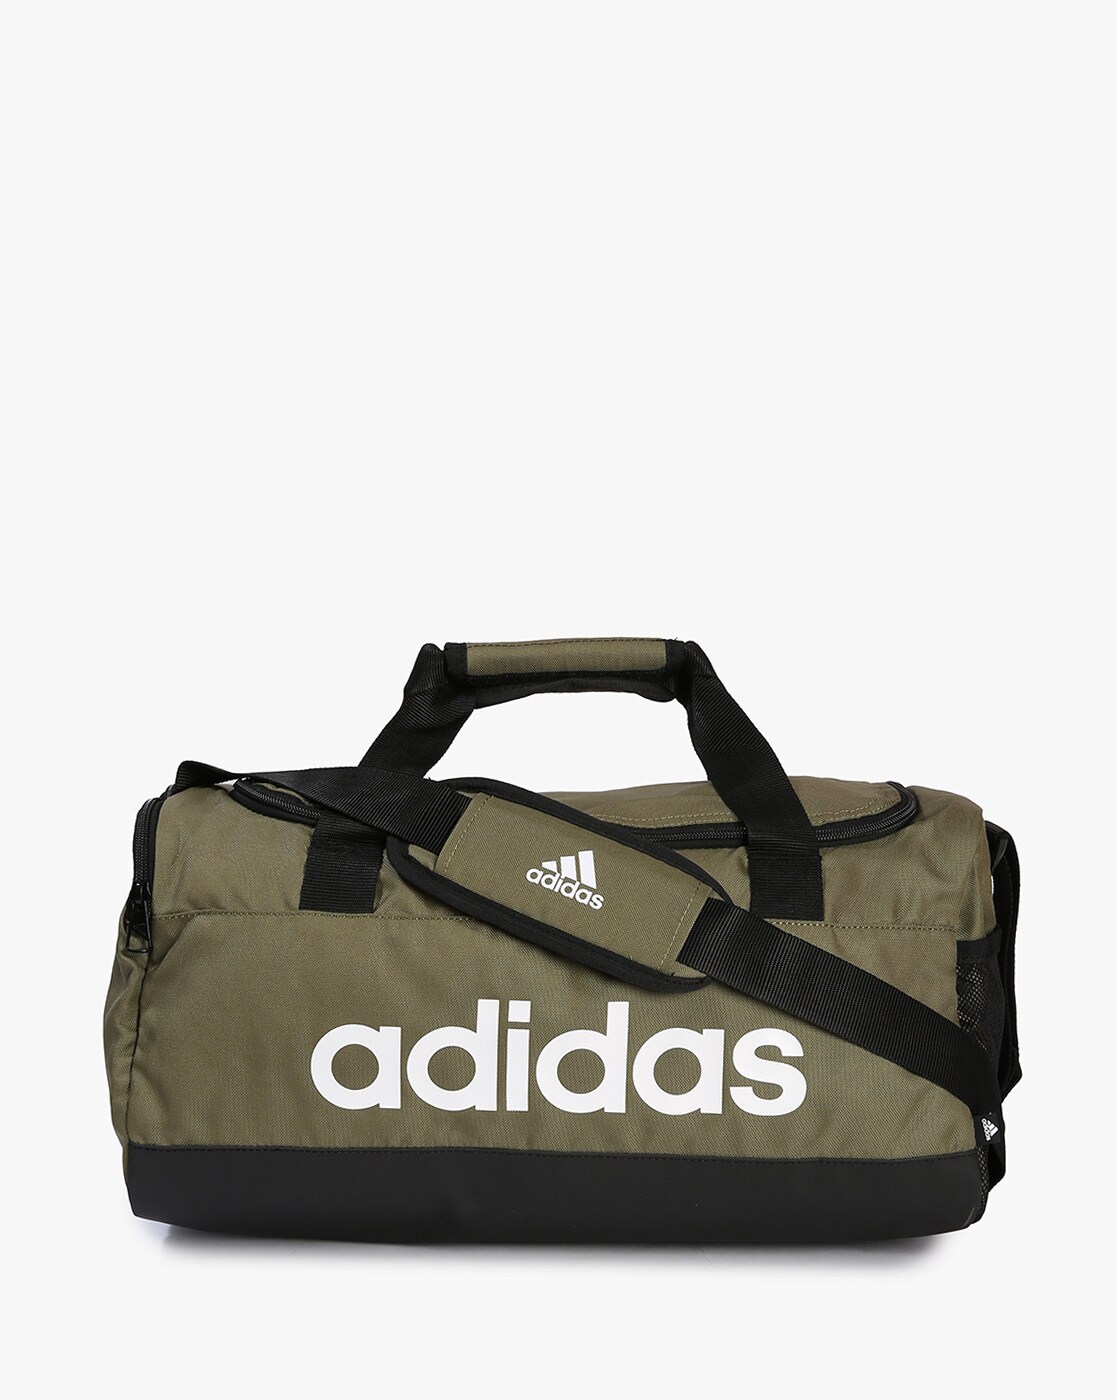 Buy Green Sports  Utility Bag for Men by ADIDAS Online  Ajiocom